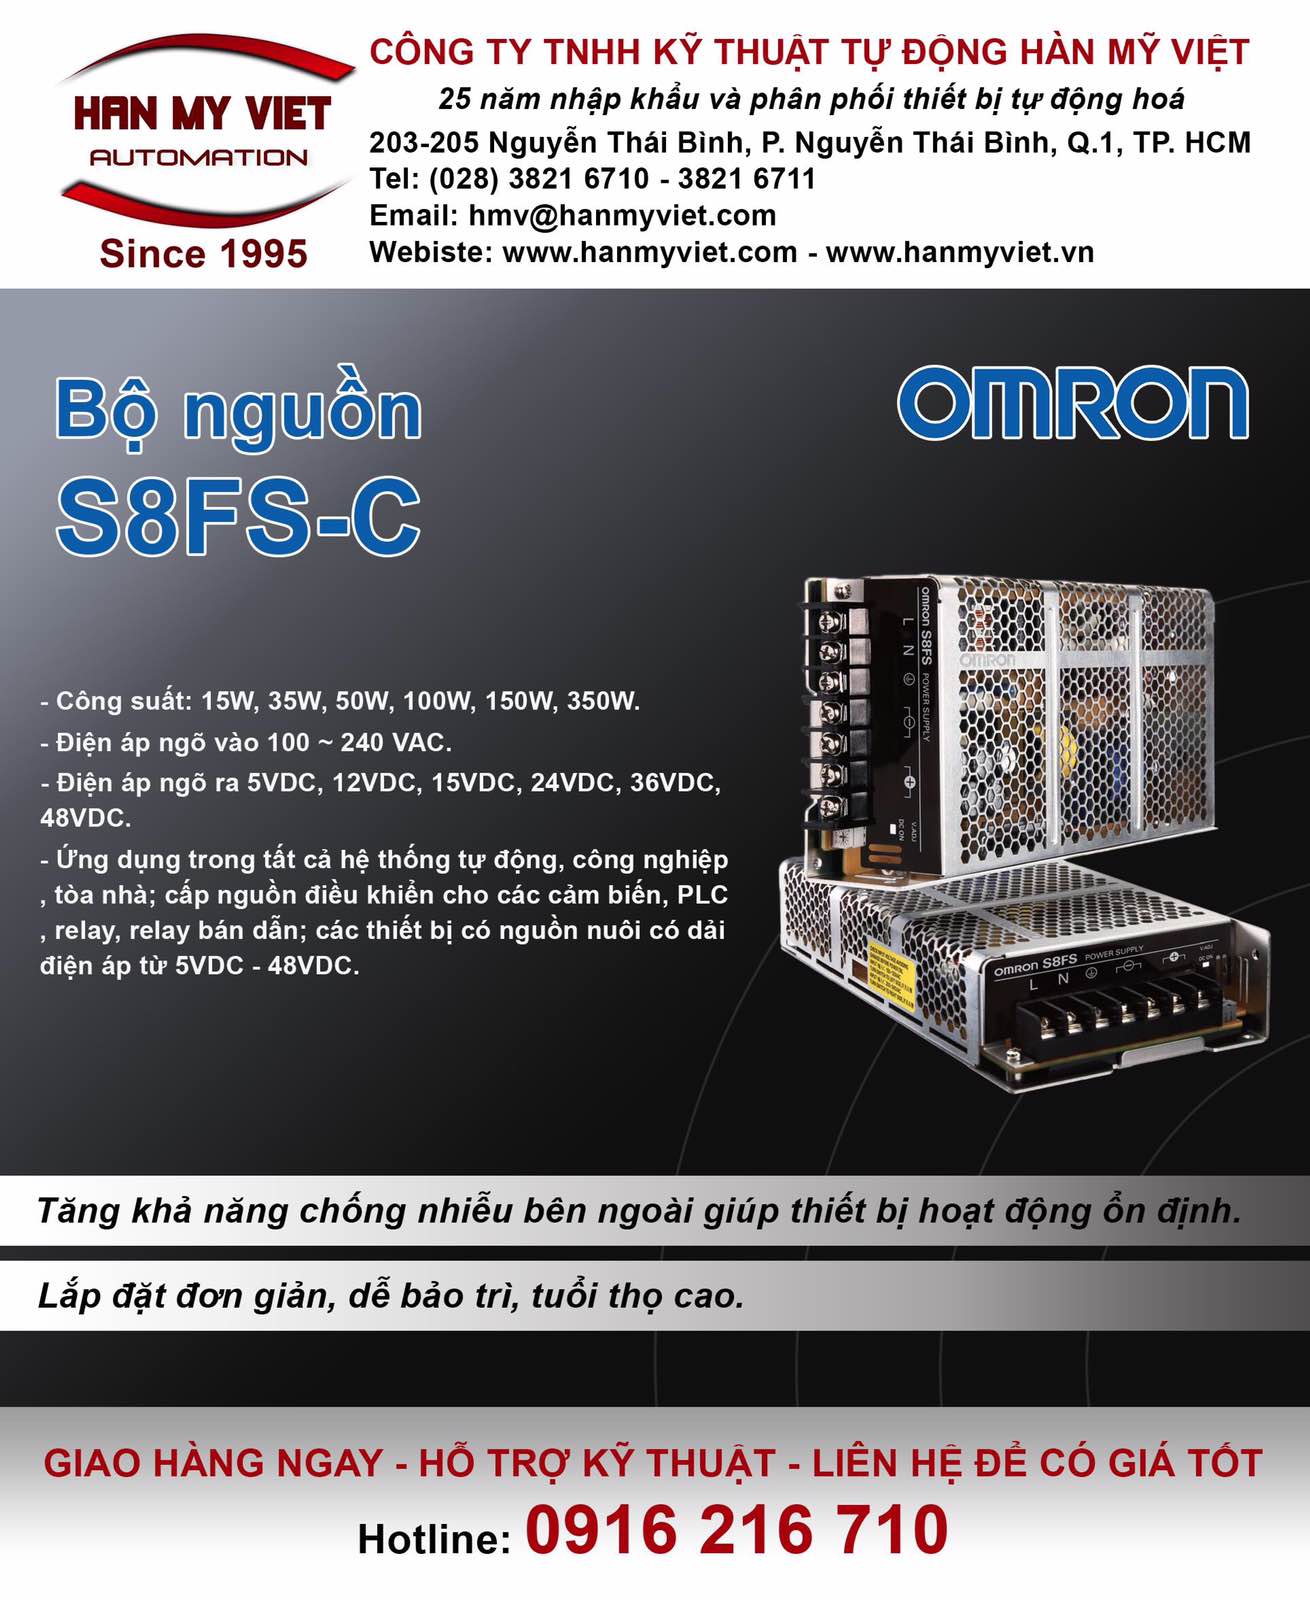 Giới thiệu bộ nguồn Omron S8FS-C